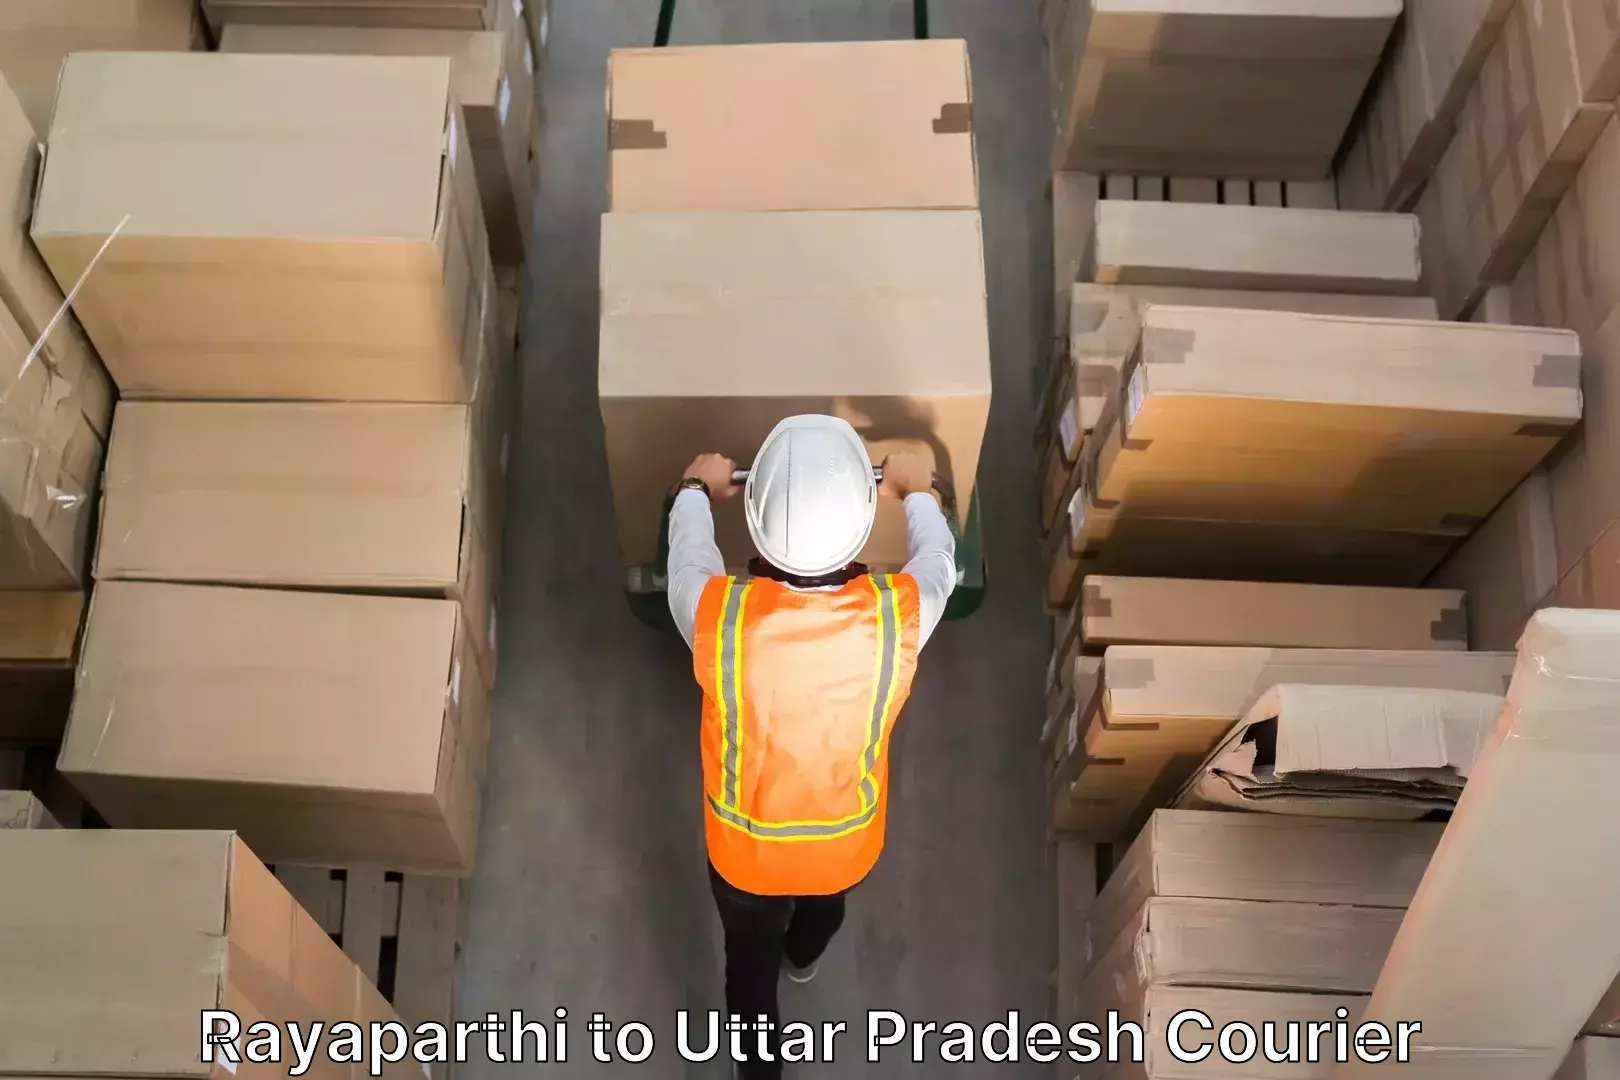 Quality moving company Rayaparthi to Uttar Pradesh